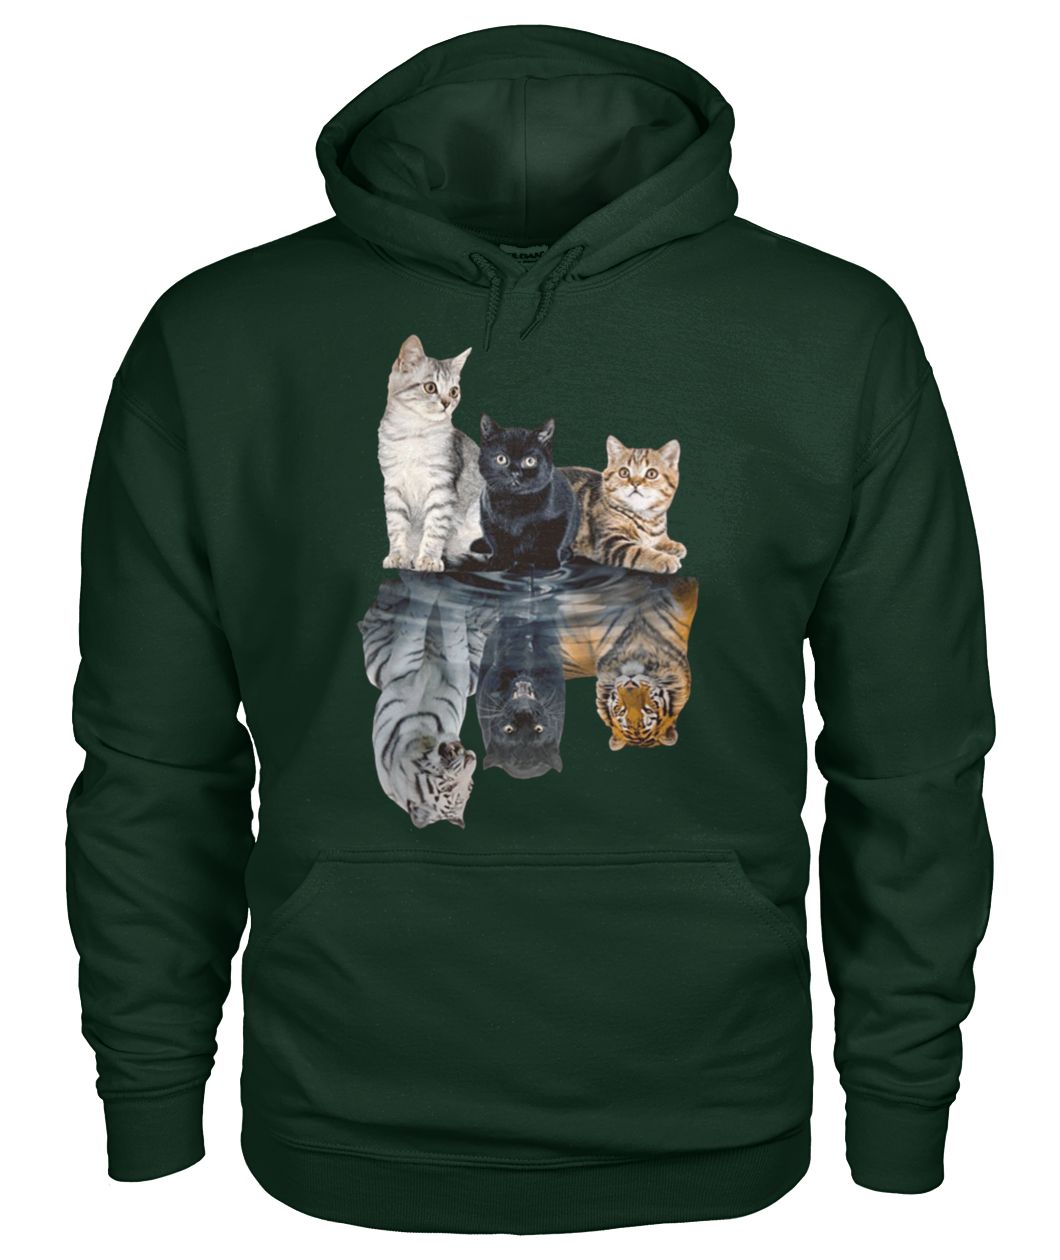 Cats reflection tigers gildan hoodie